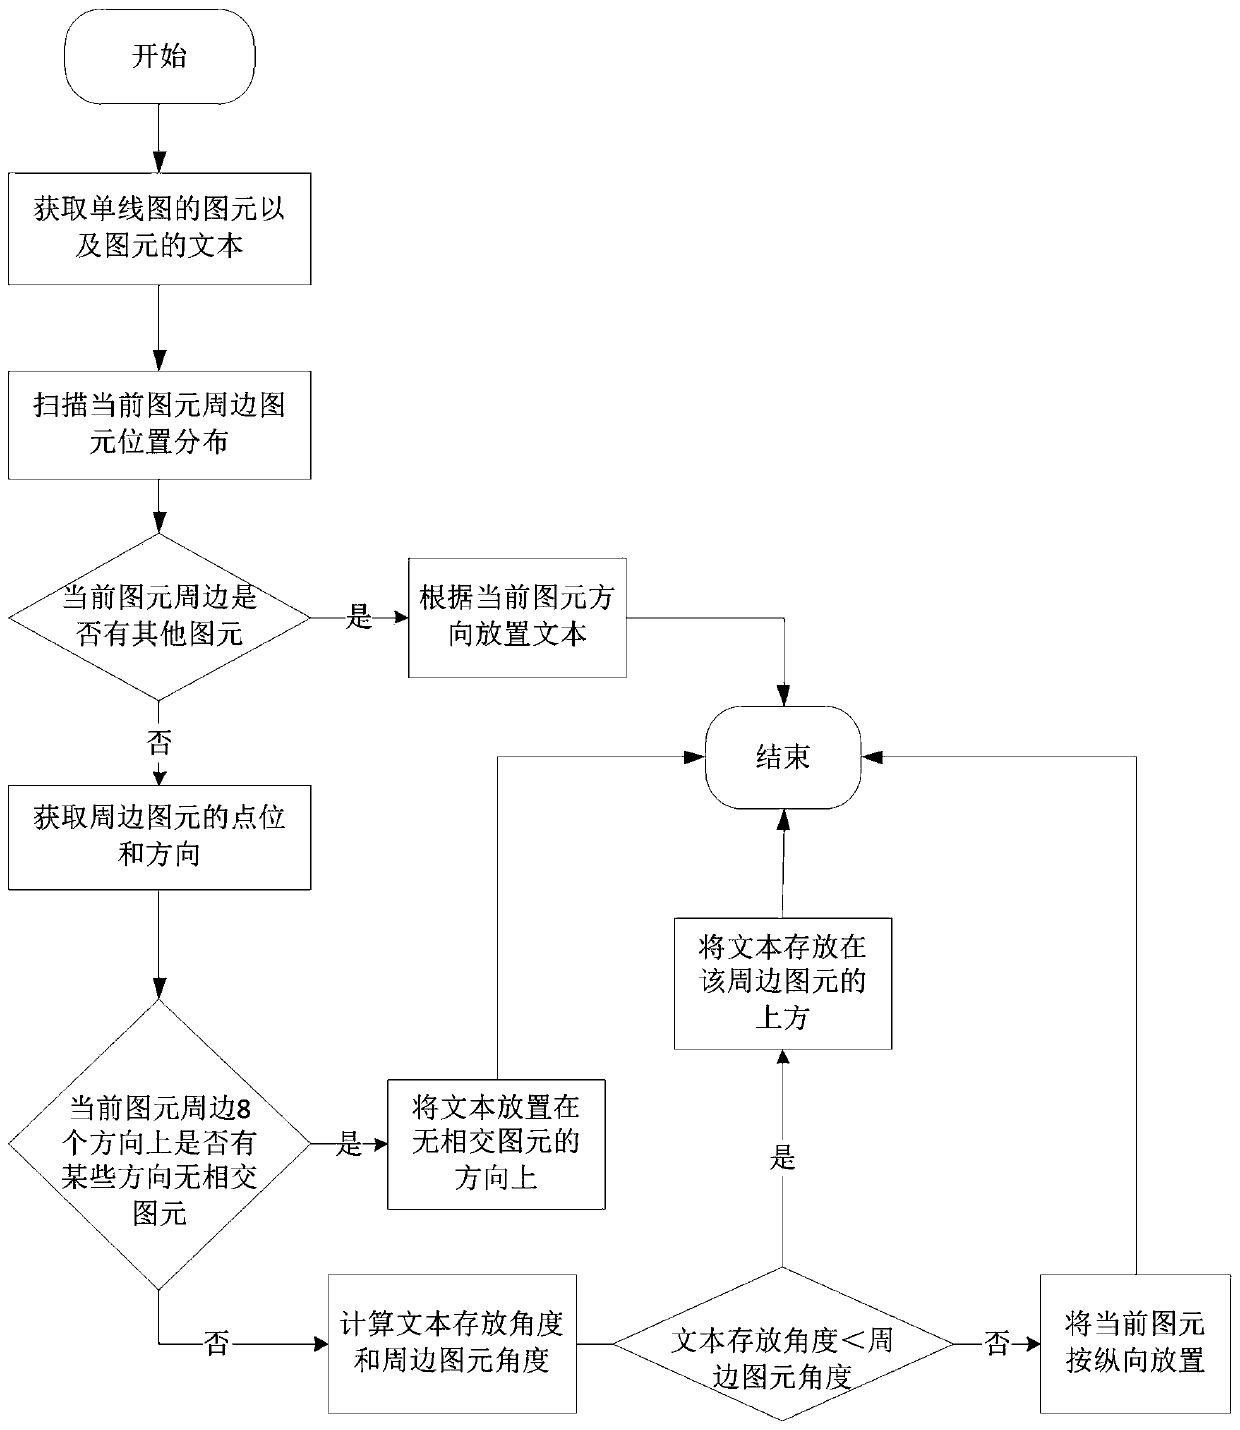 Optimization method for single line diagram of distribution network system